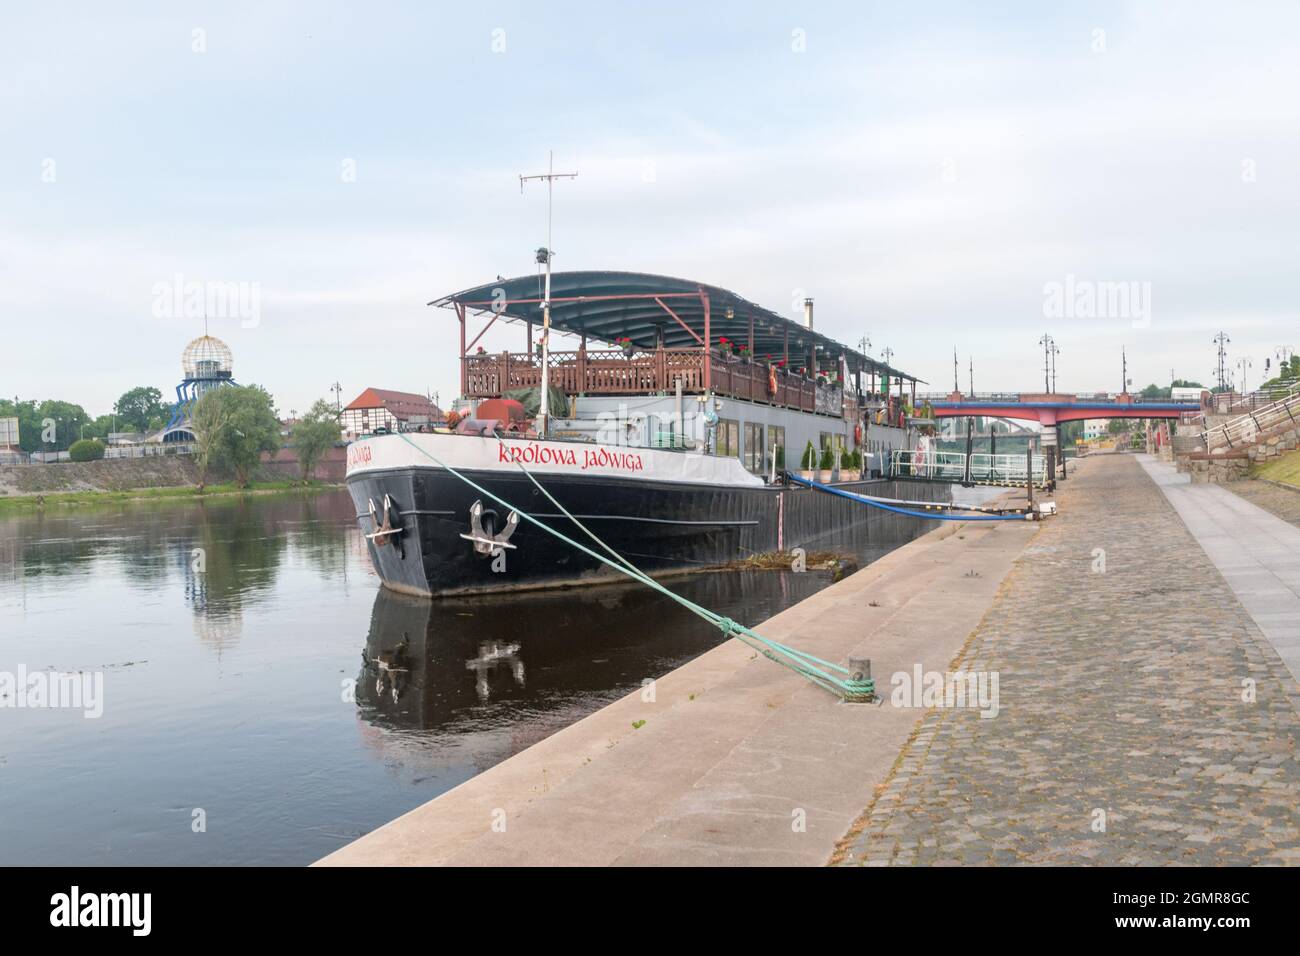 Gorzow Wielkopolski, Pologne - 1er juin 2021 : navire Krolowa Jadwiga (Reine Jadwiga) sur la rivière warta. Banque D'Images